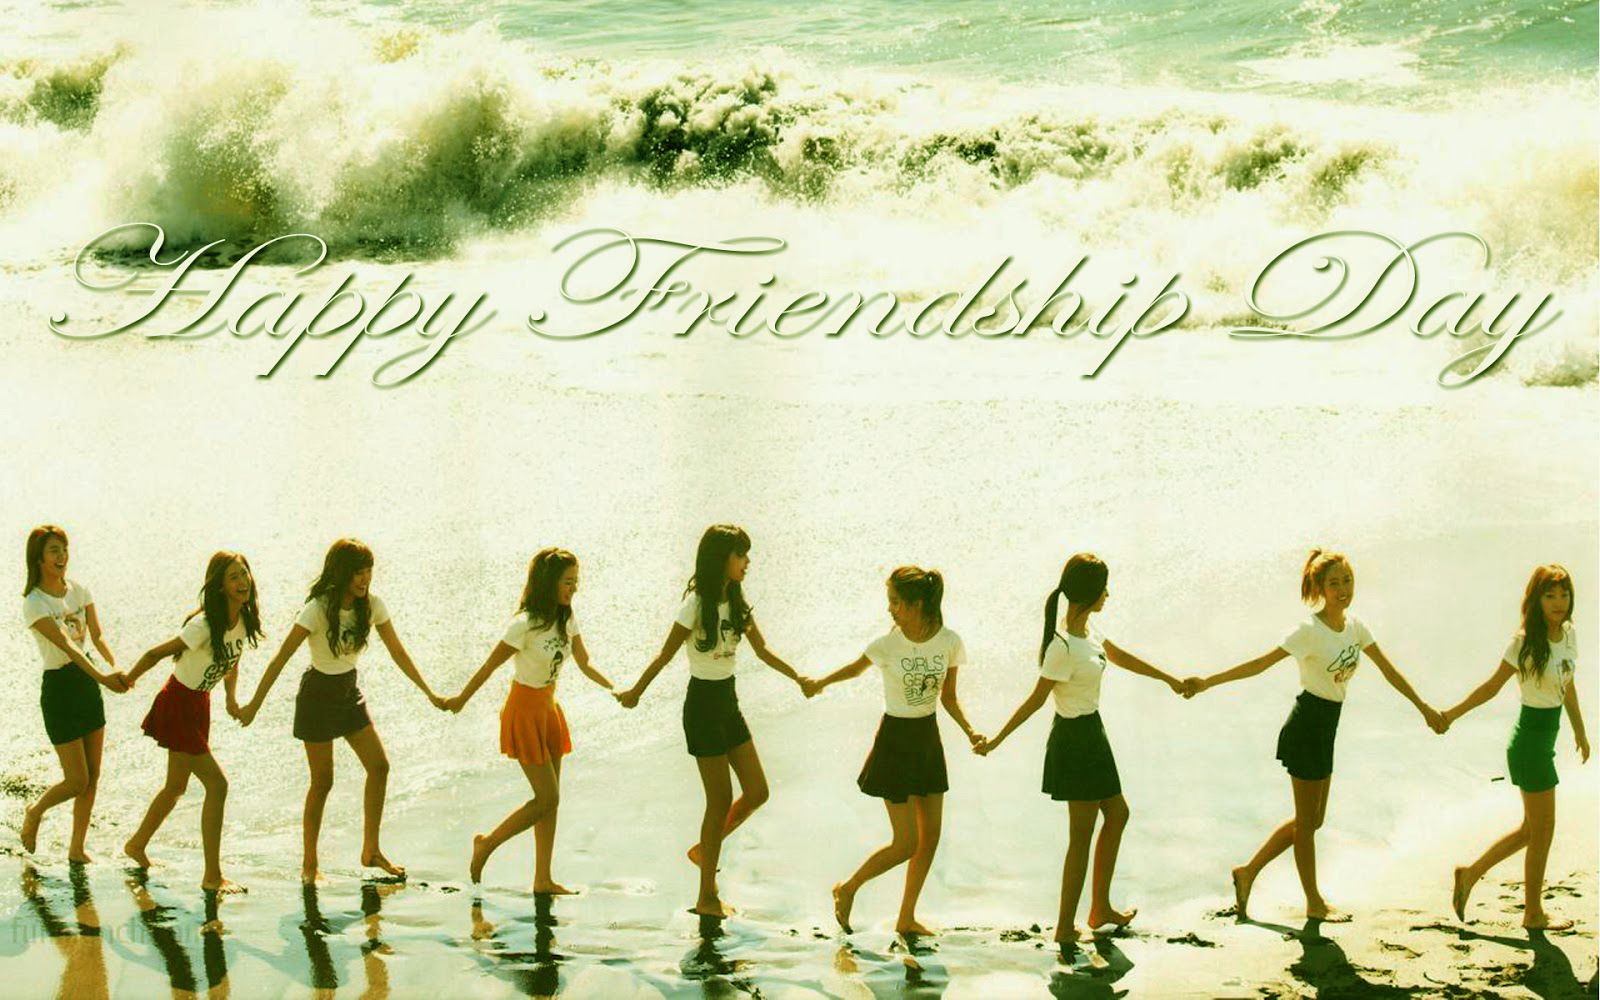 Happy Friendship Day Wallpaper HD Day Photo Free Download HD Wallpaper